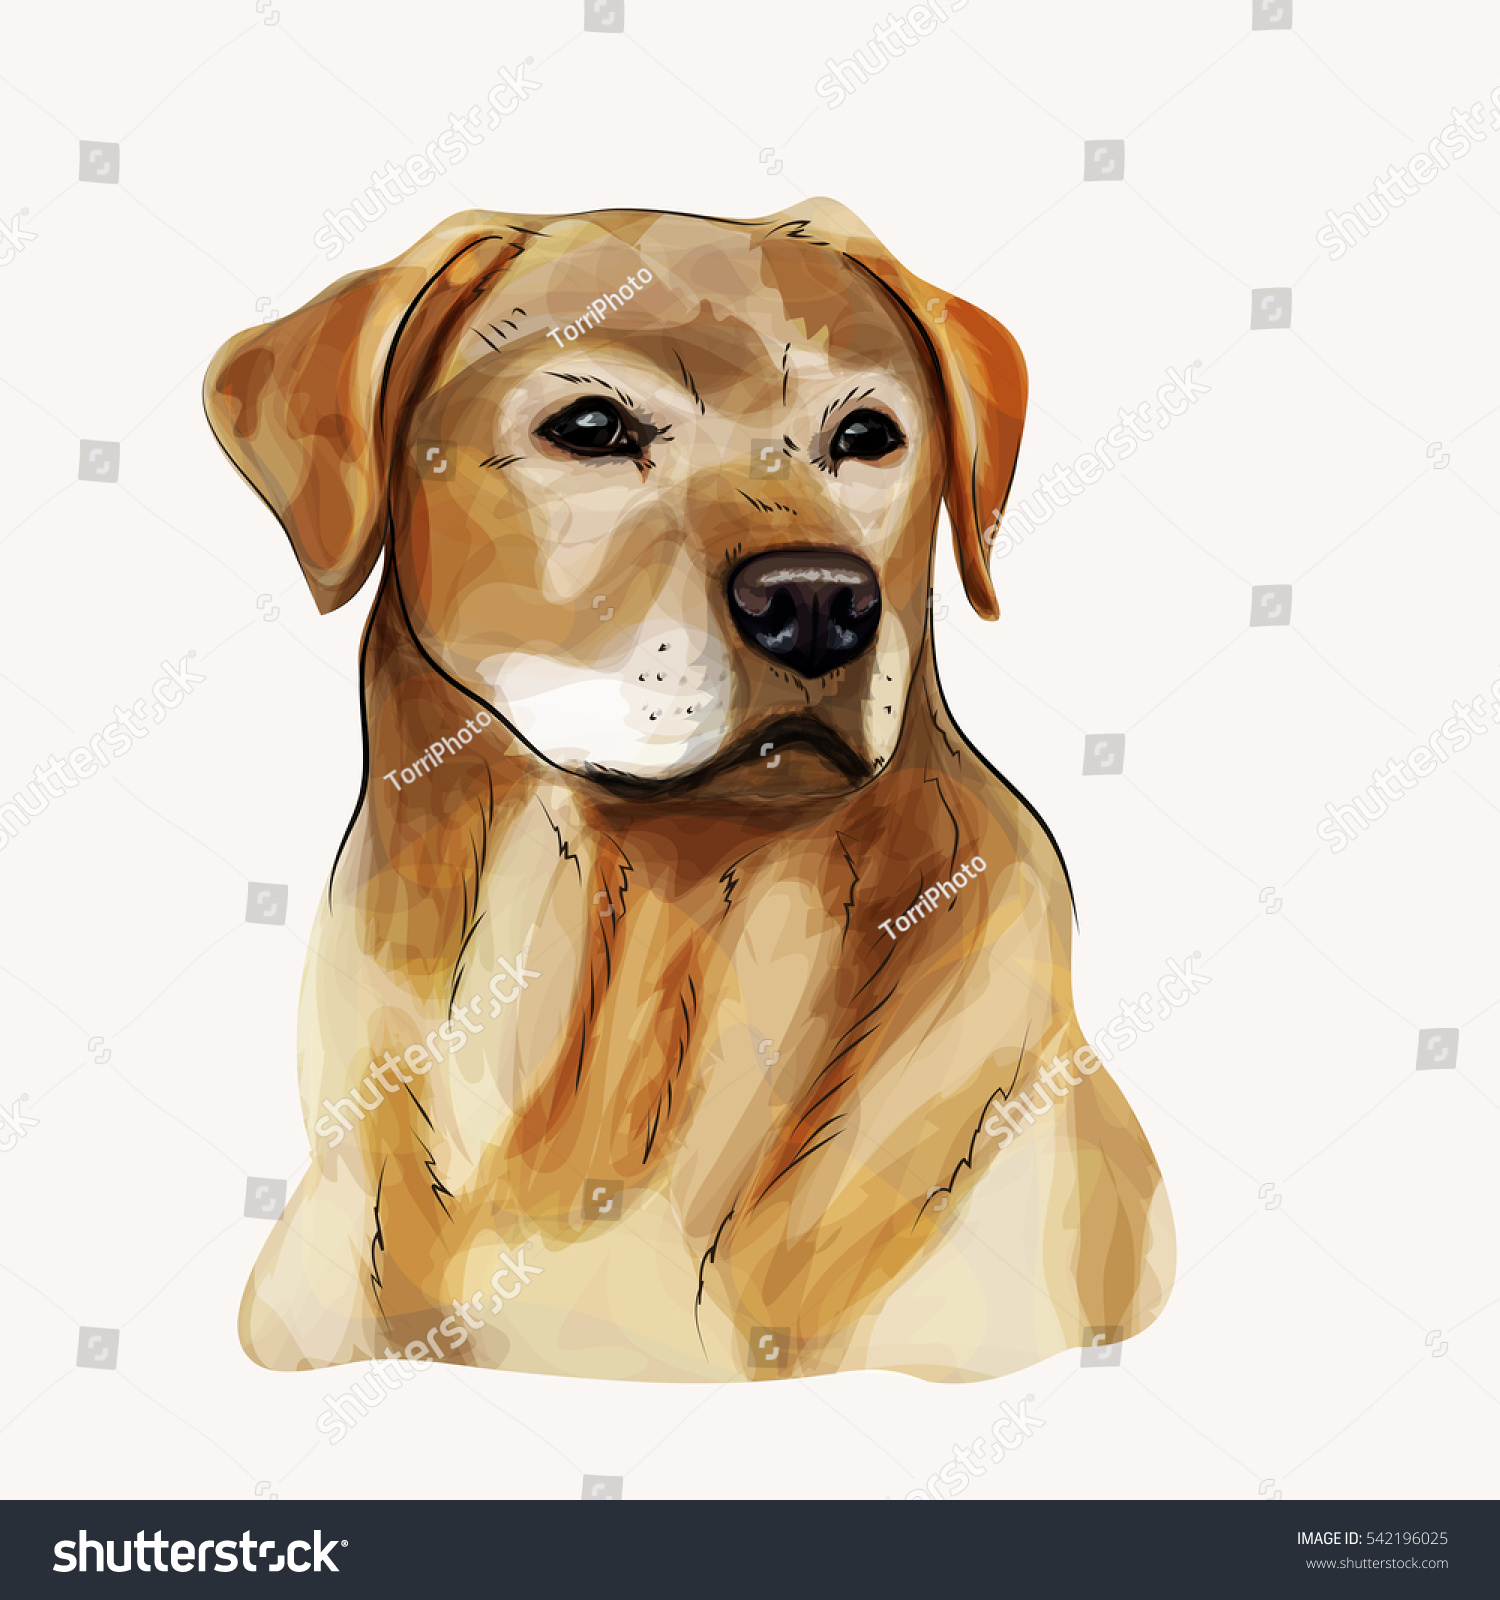 https://www.shutterstock.com/image-illustration/digital-illustration-yellow-dog-breed-labrador-542196025